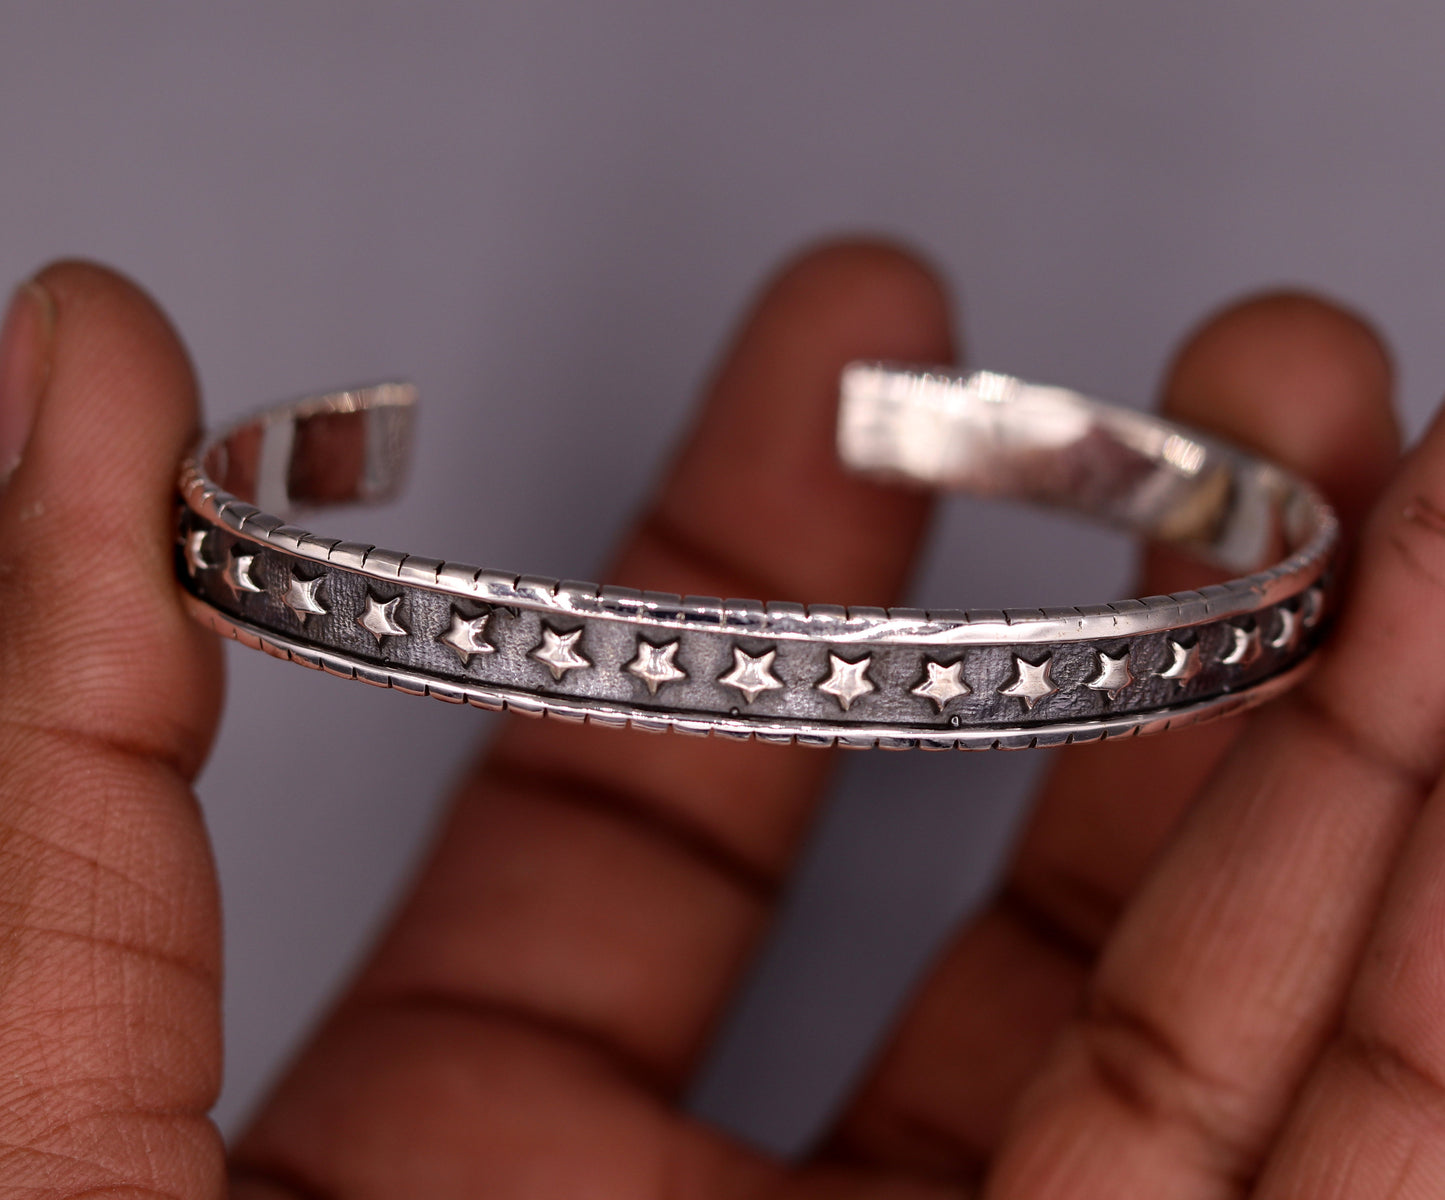 Amazing Vintage antique design 925 sterling silver cuff bangle bracelet adjustable kada unisex personalized gifting jewelry nsk145 - TRIBAL ORNAMENTS